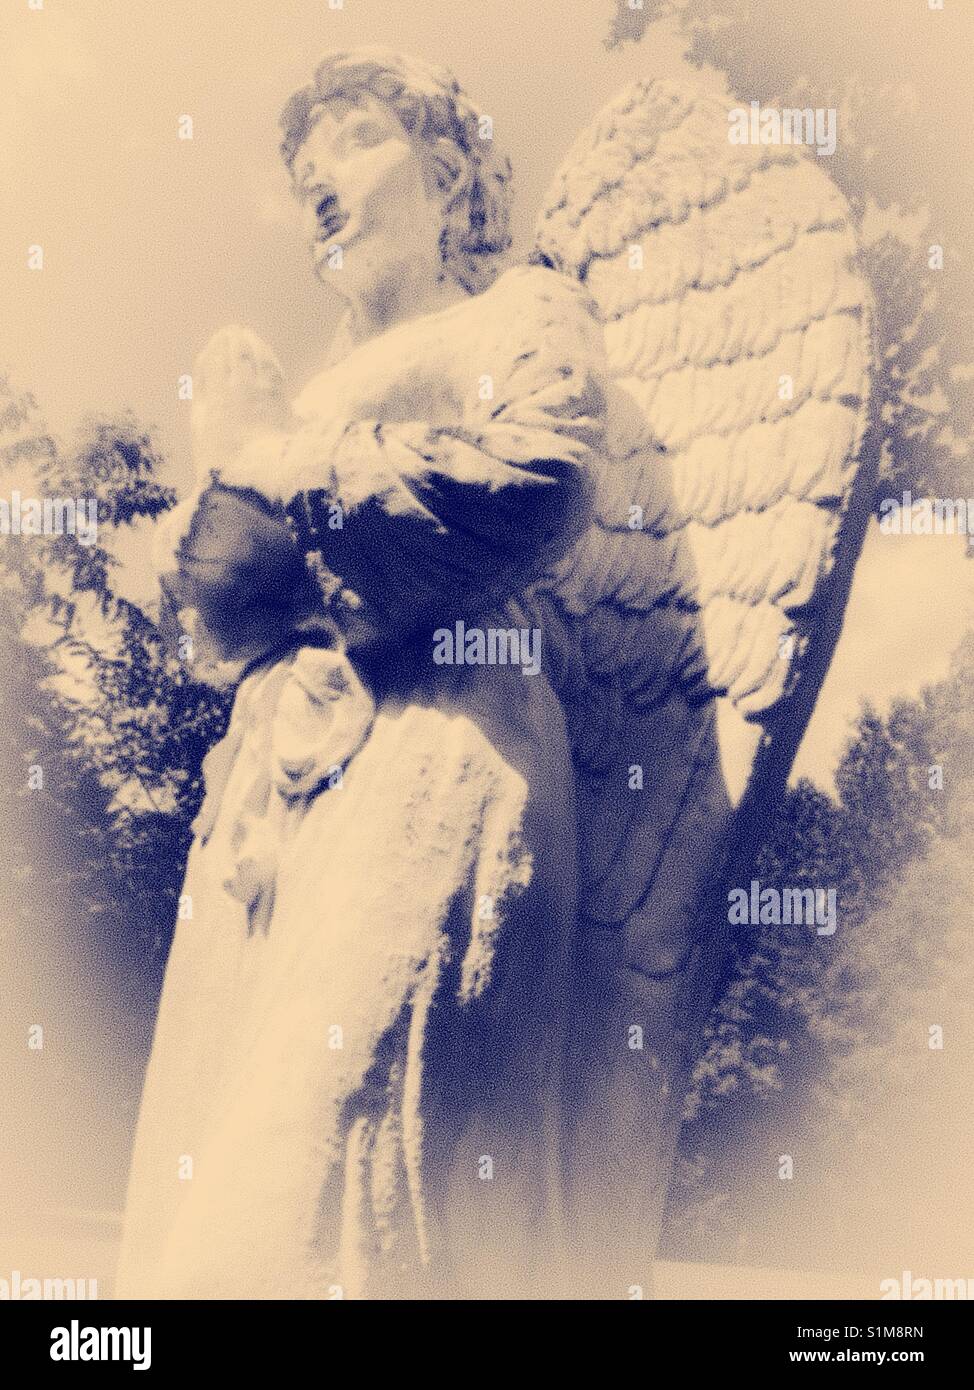 Praying angel- statue of white angel in prayer pose stands in garden Stock Photo